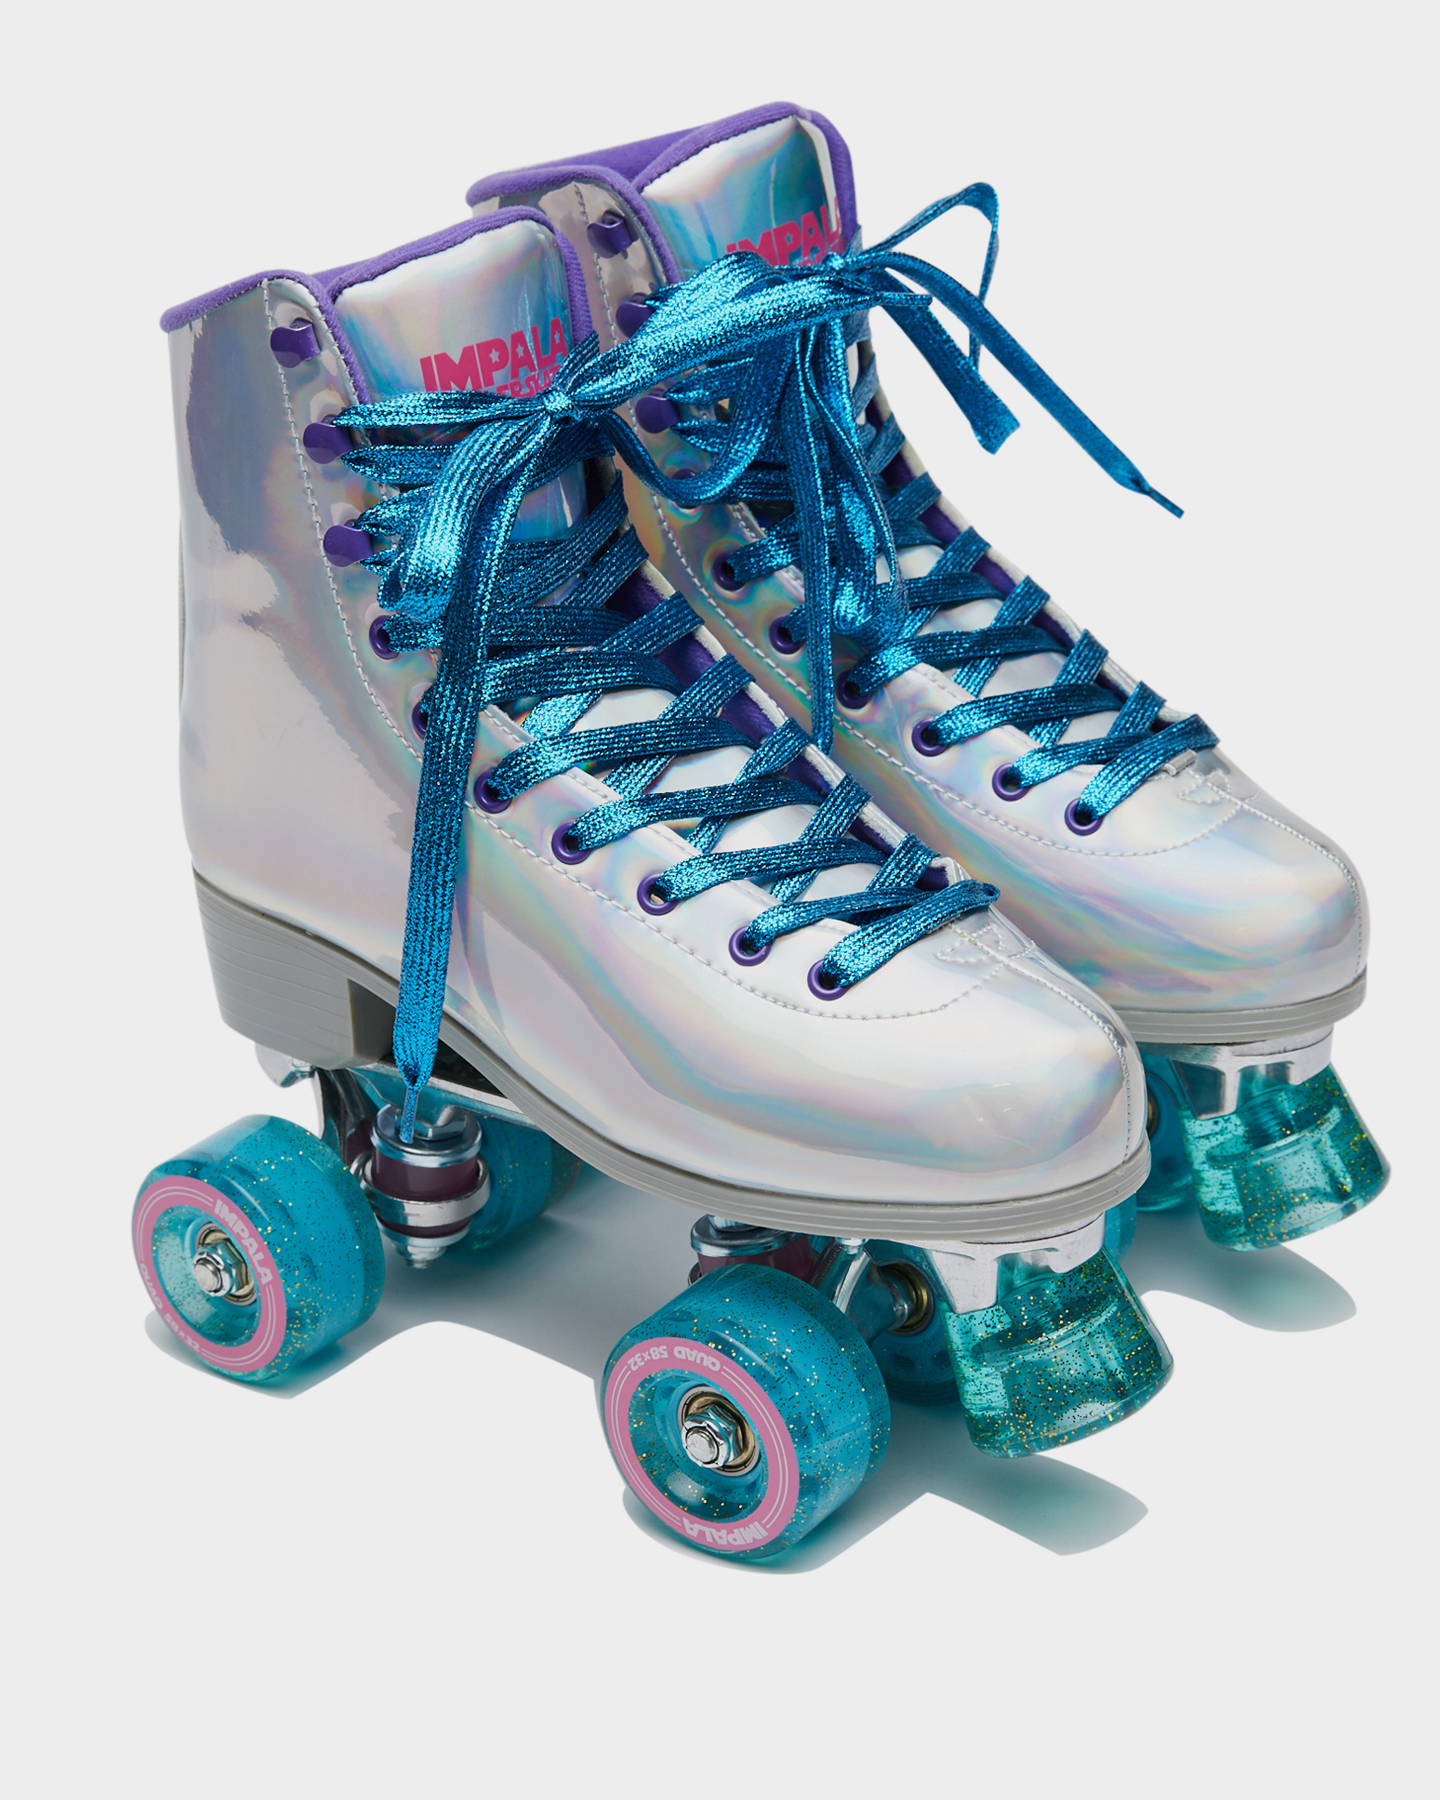 Impala Sidewalk Skates Rollerskates Quad Holographic 